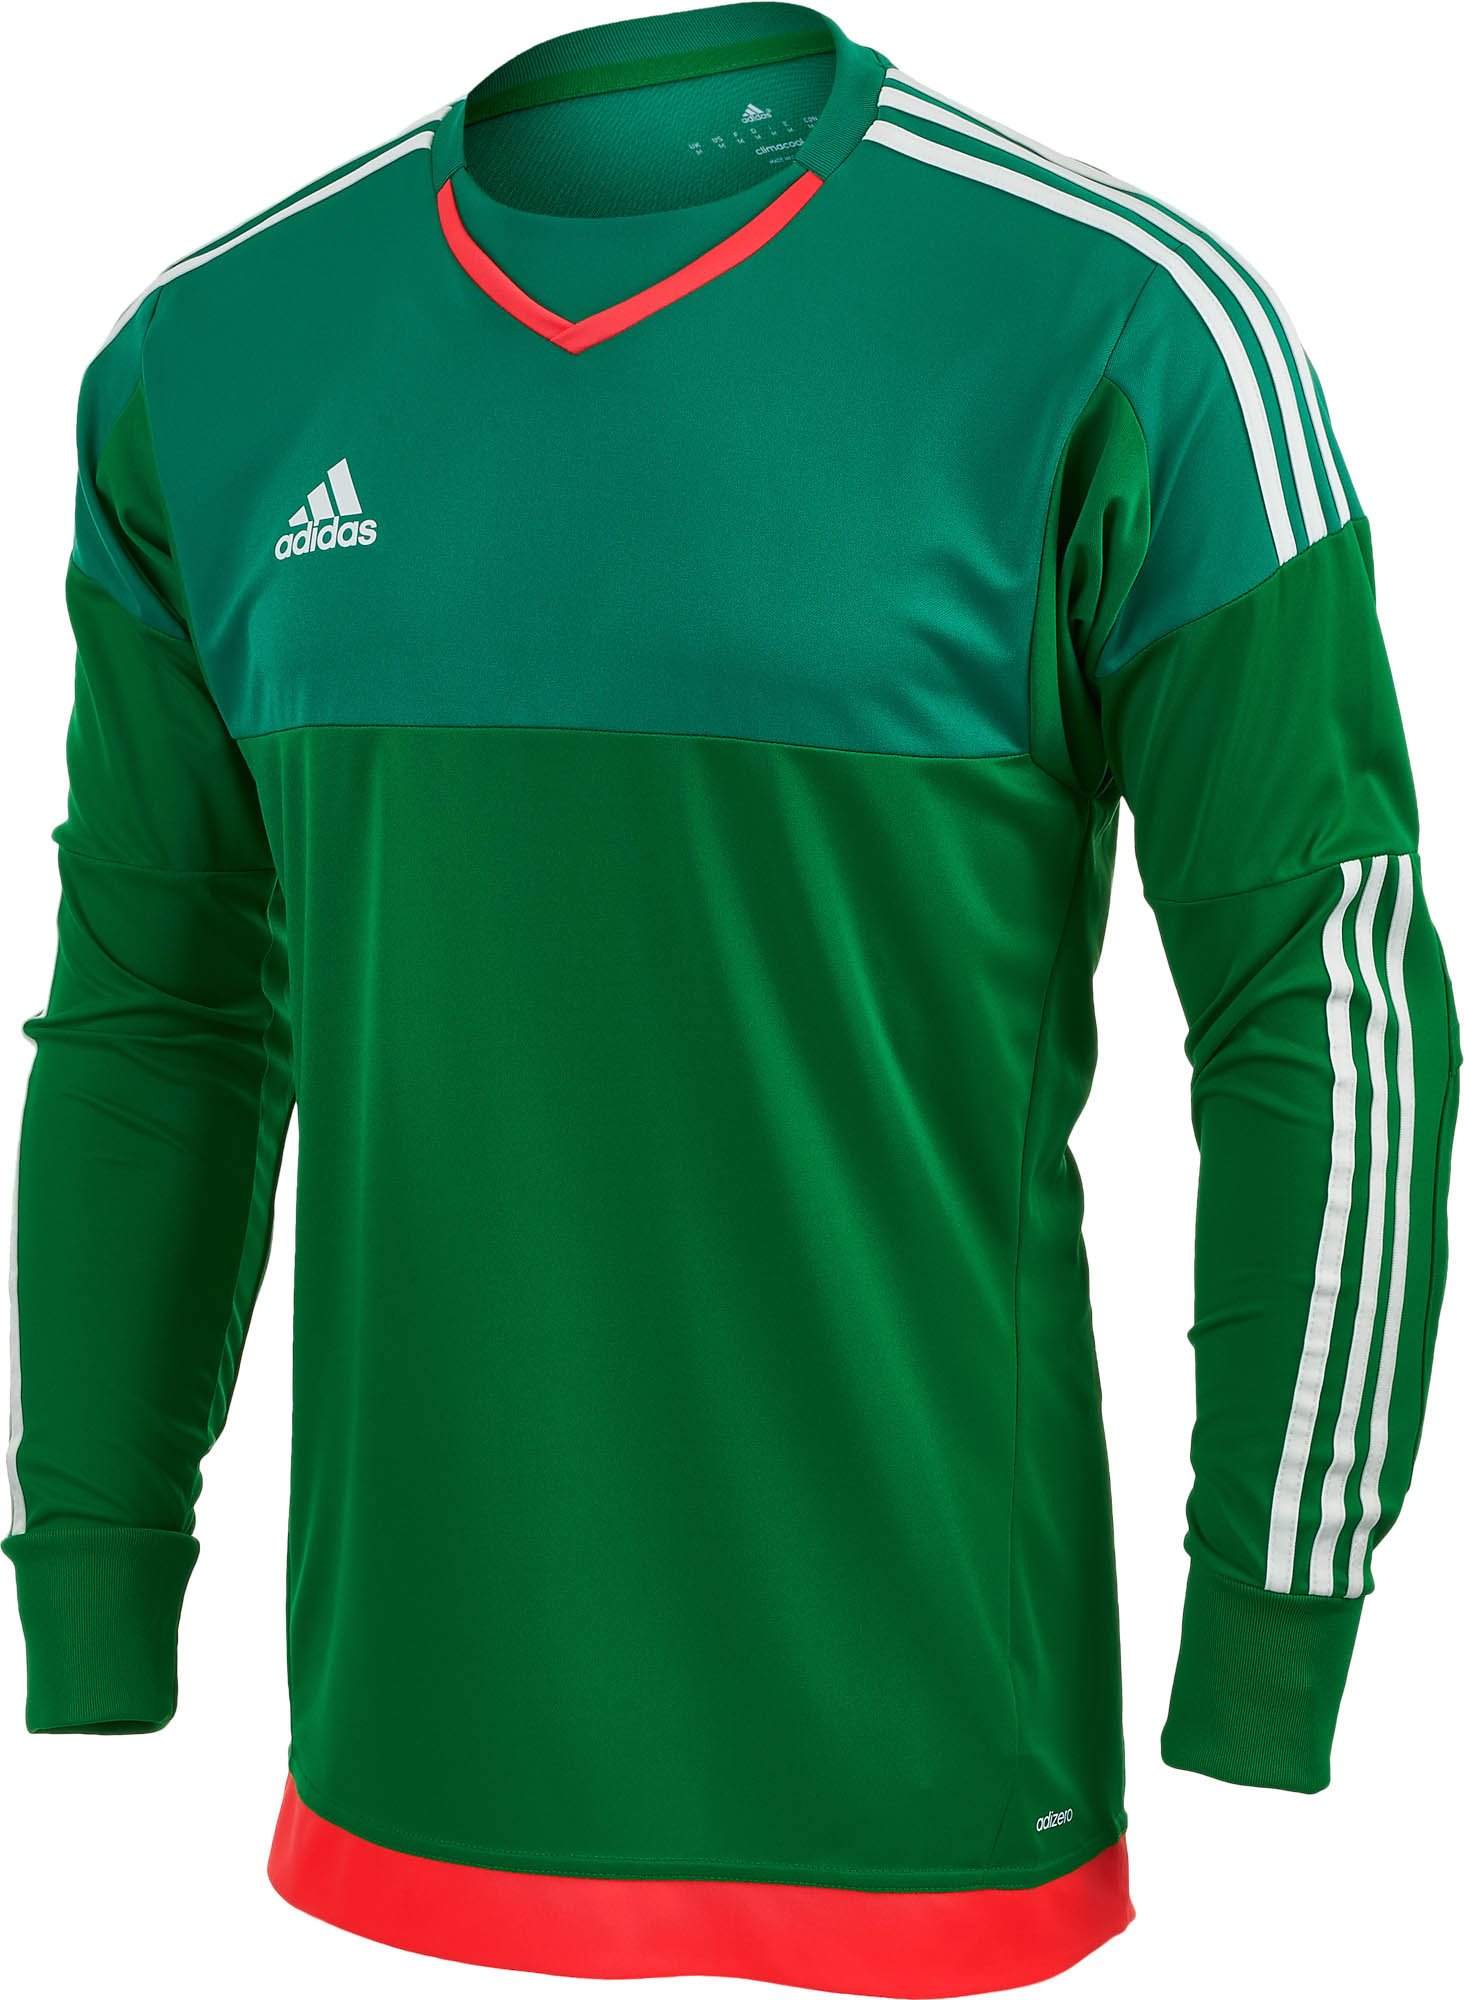 Green adidas Top Goalkeeping Jersey - adidas Goalie Jerseys